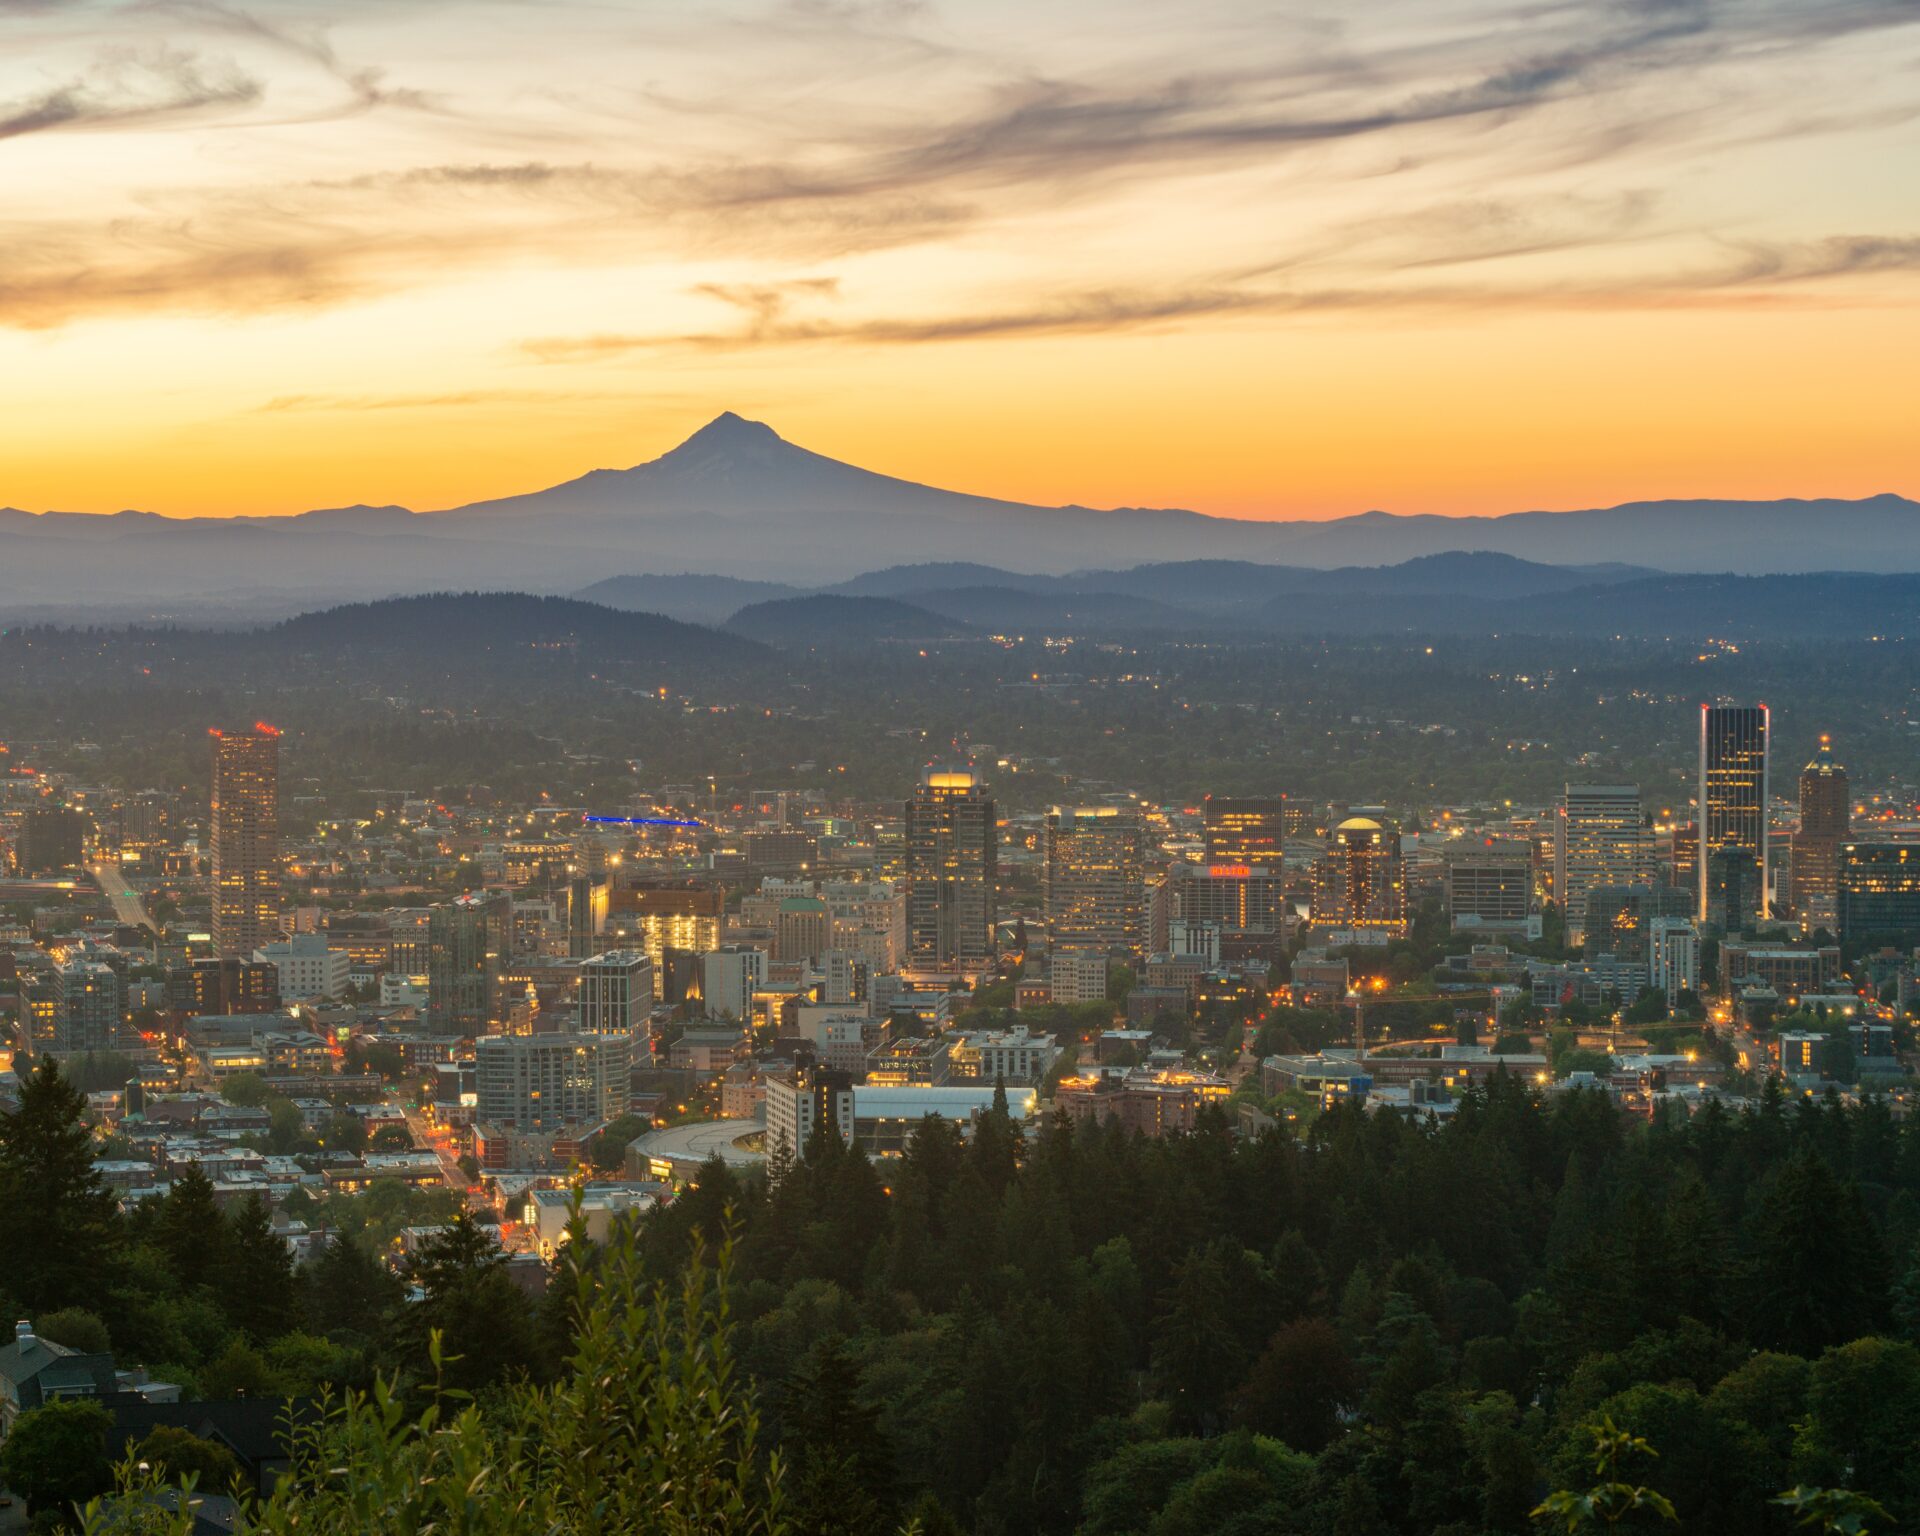 City skyline in Portland with Mountain peak